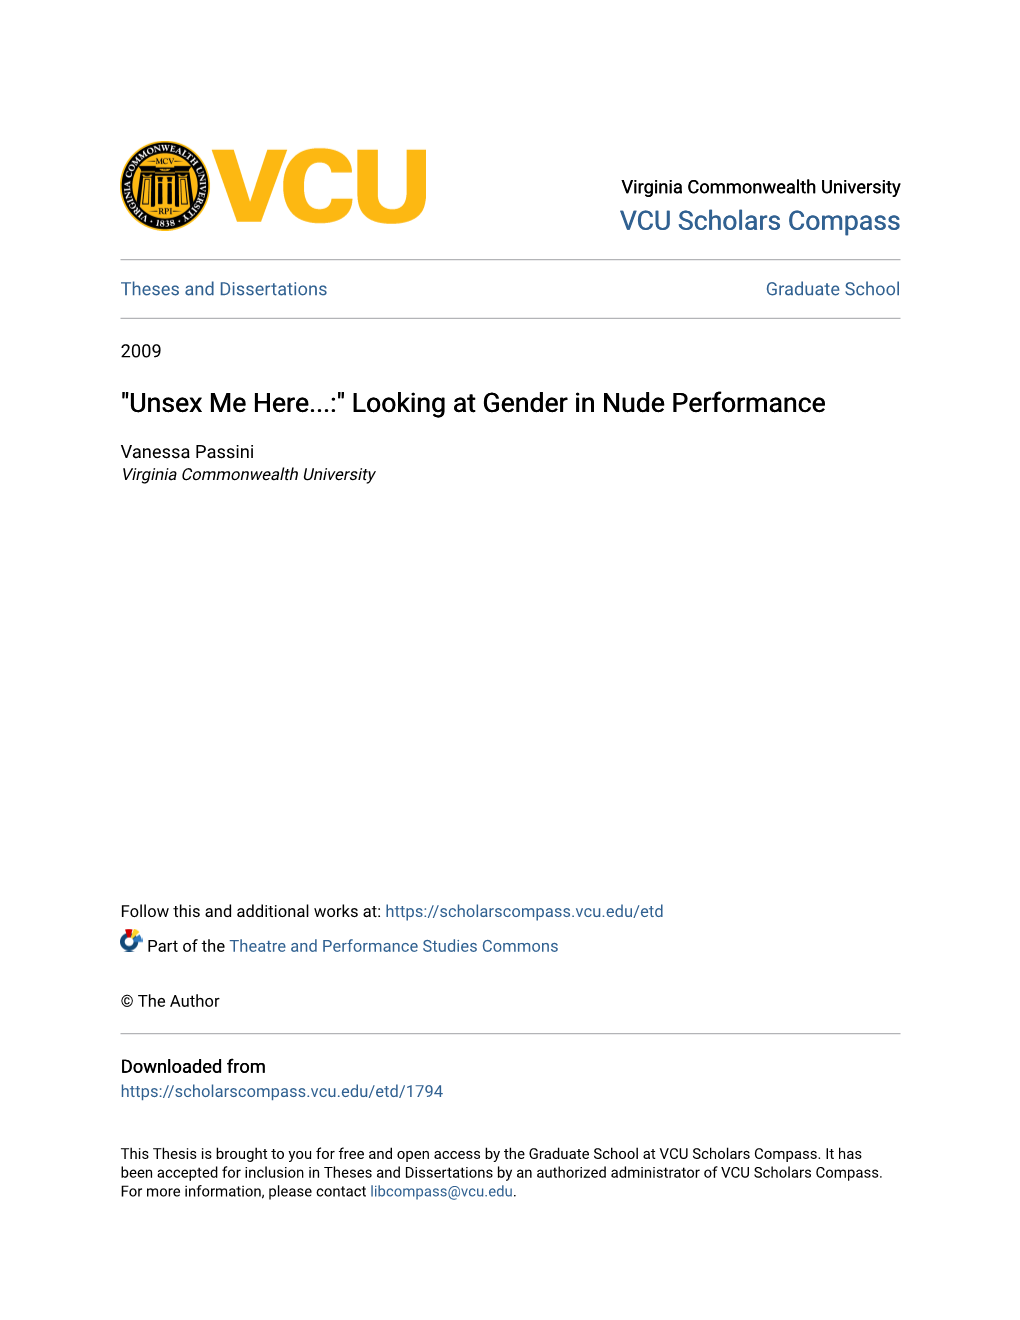 Looking at Gender in Nude Performance